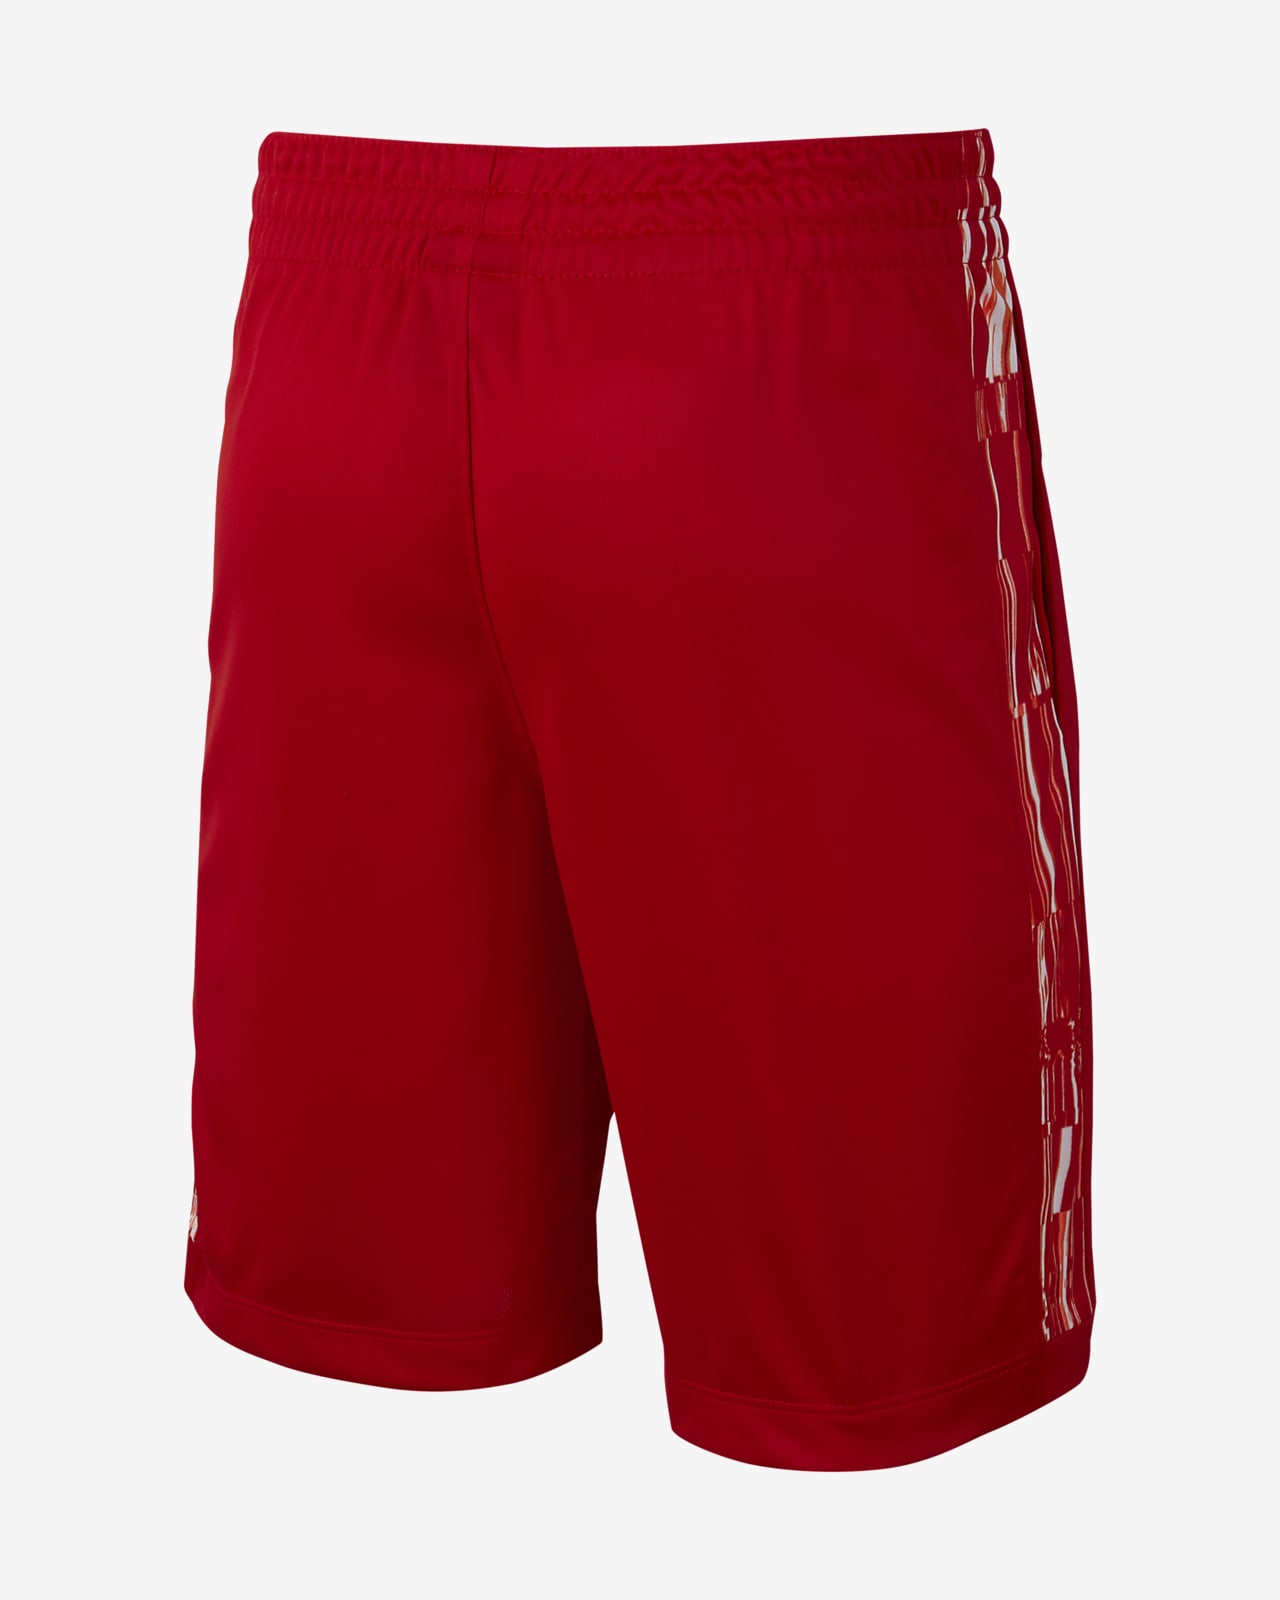 red nike shorts boys